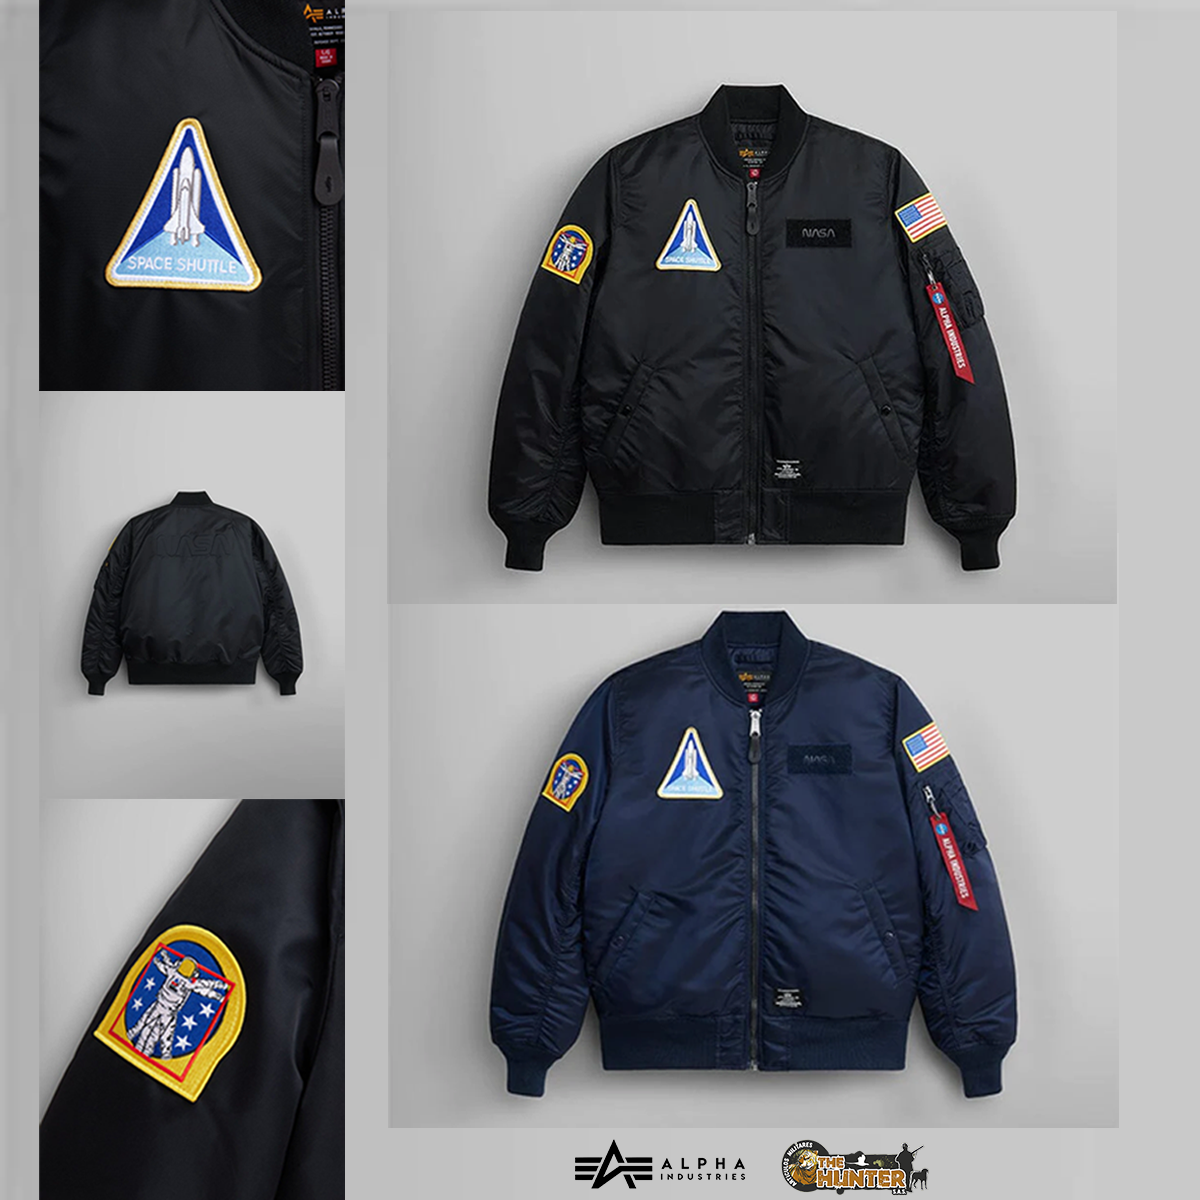 Alpha Industries cwu 45/p chaqueta de vuelo réplica azul militar, táctica,  usaf